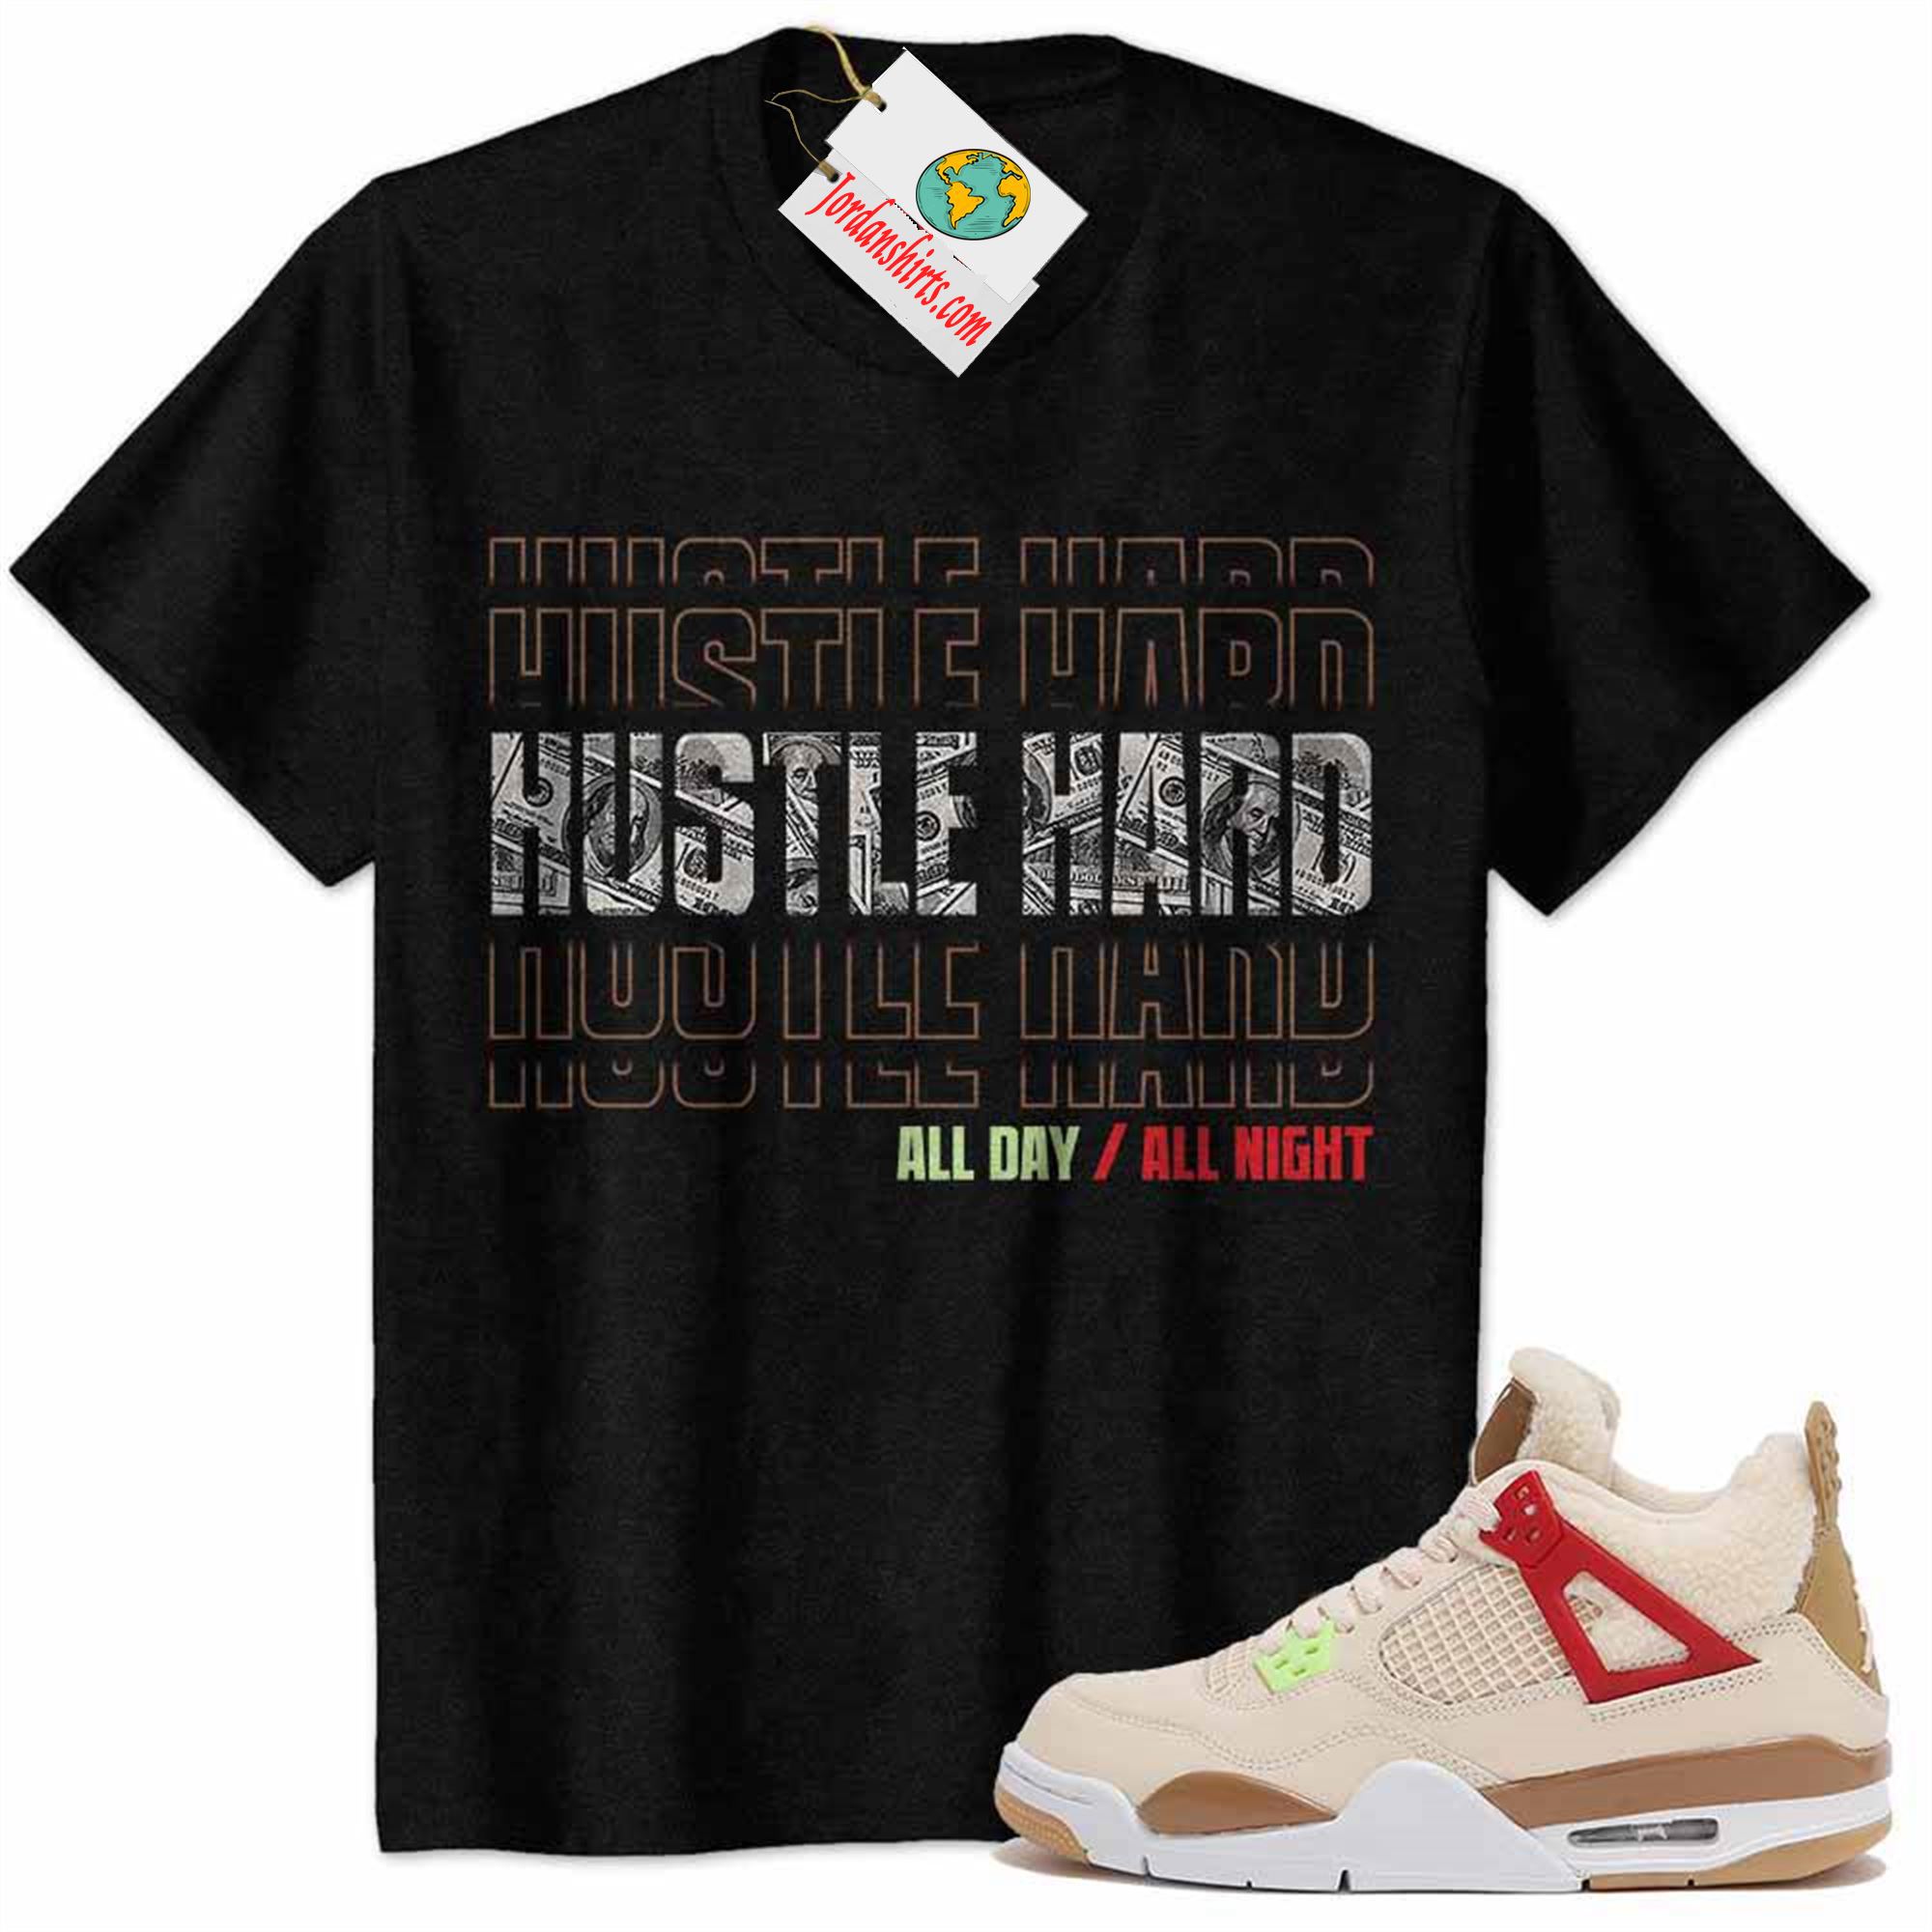 Jordan 4 Shirt, Hustle Hard All Day All Night Dollar Money Black Air Jordan 4 Wild Things 4s Plus Size Up To 5xl